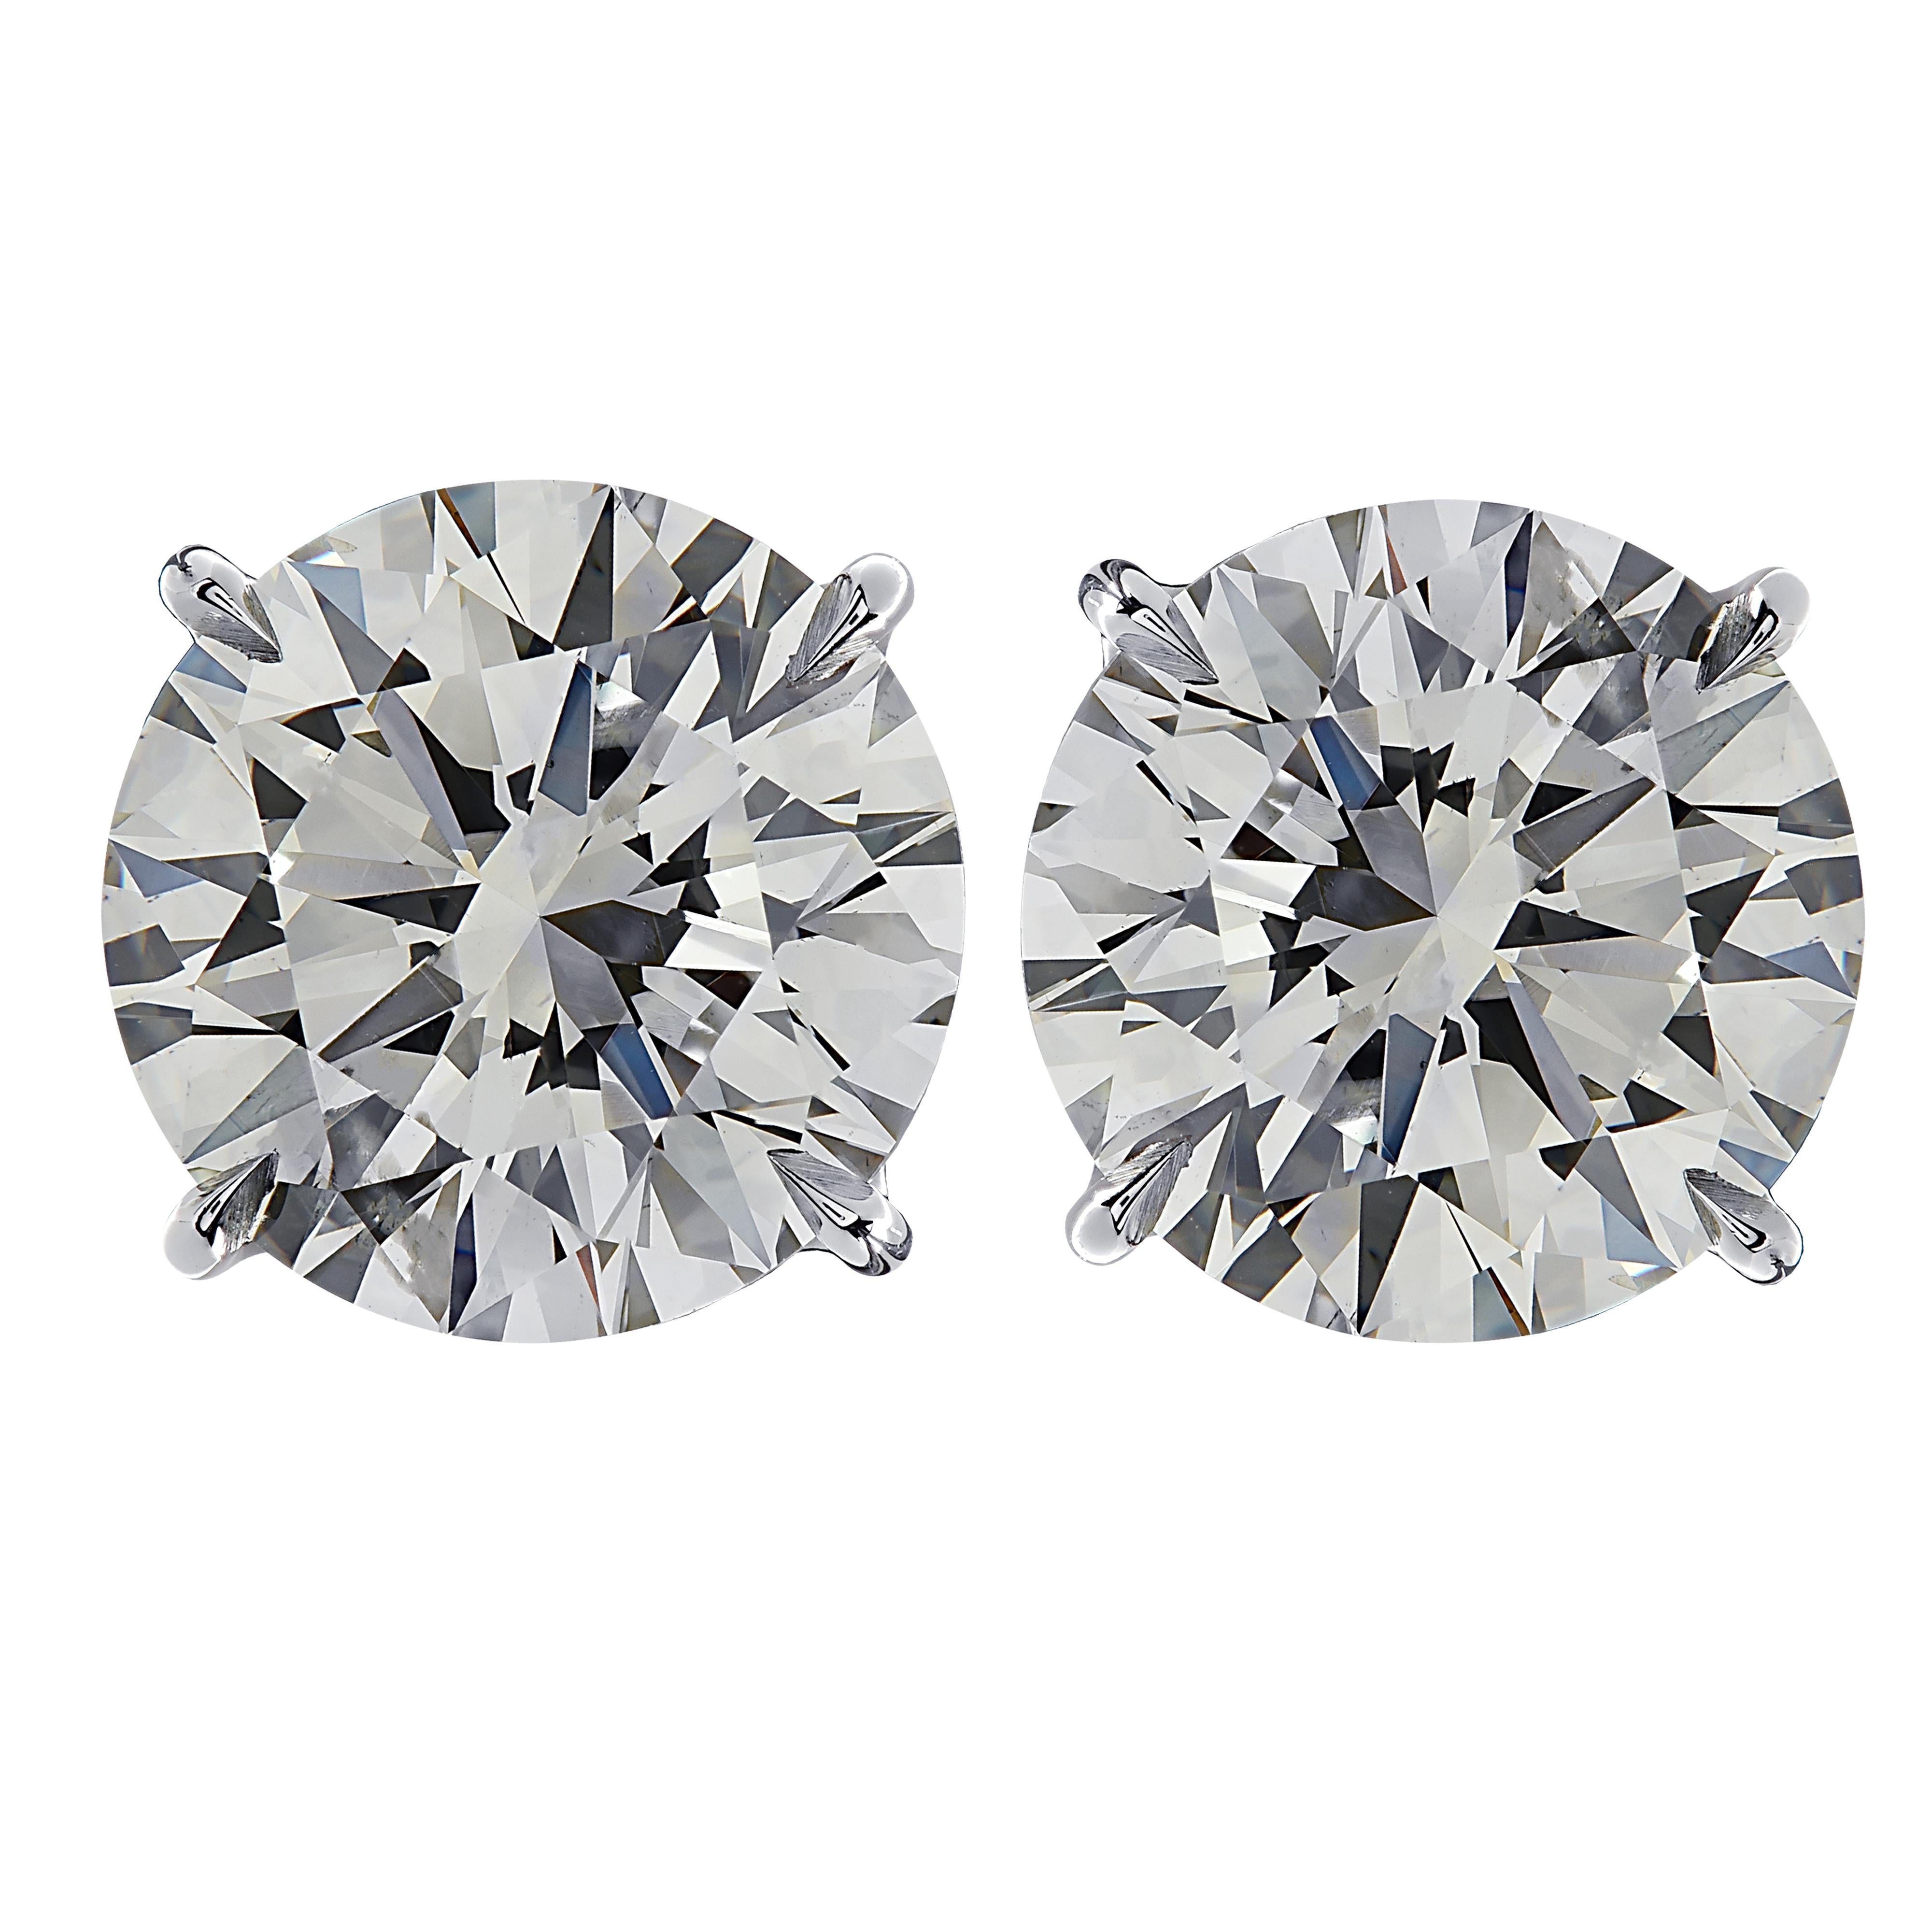 Round Cut Vivid Diamonds GIA Certified 7.01 Carat Diamond Solitaire Stud Earrings For Sale